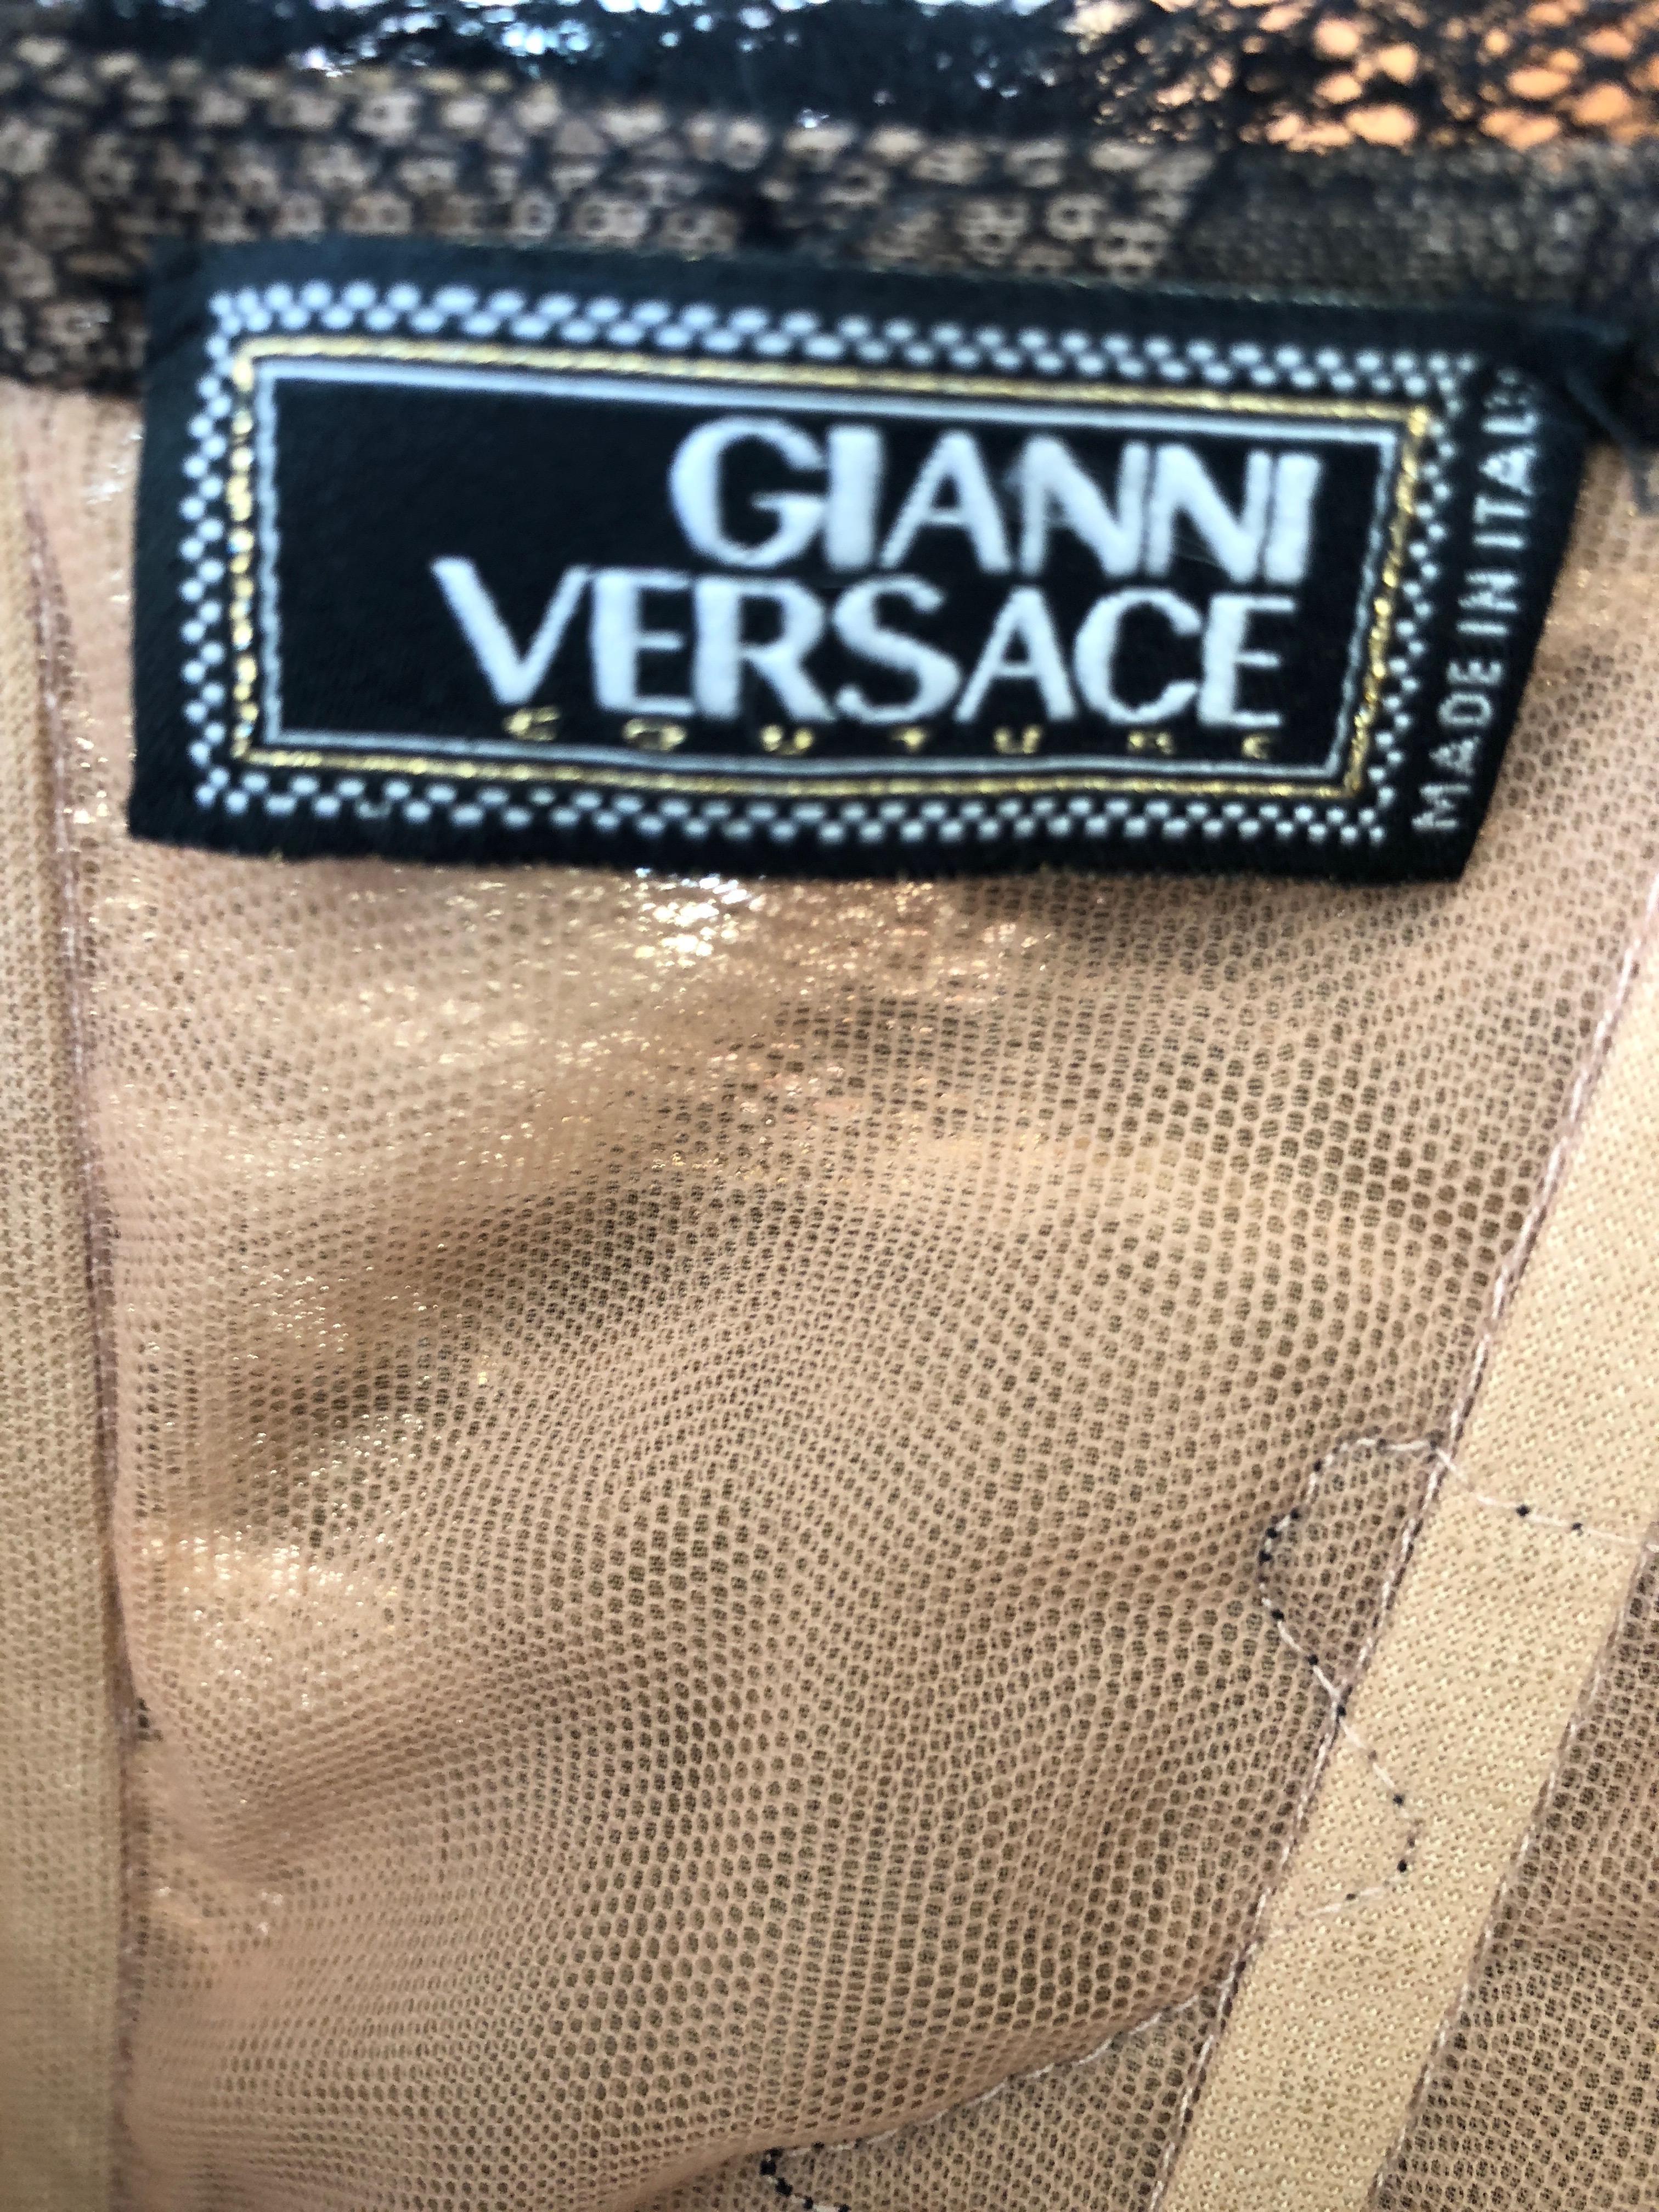 Gianni Versace Couture Vintage Black Devore Velvet Sheer Corseted Cocktail Dress For Sale 5